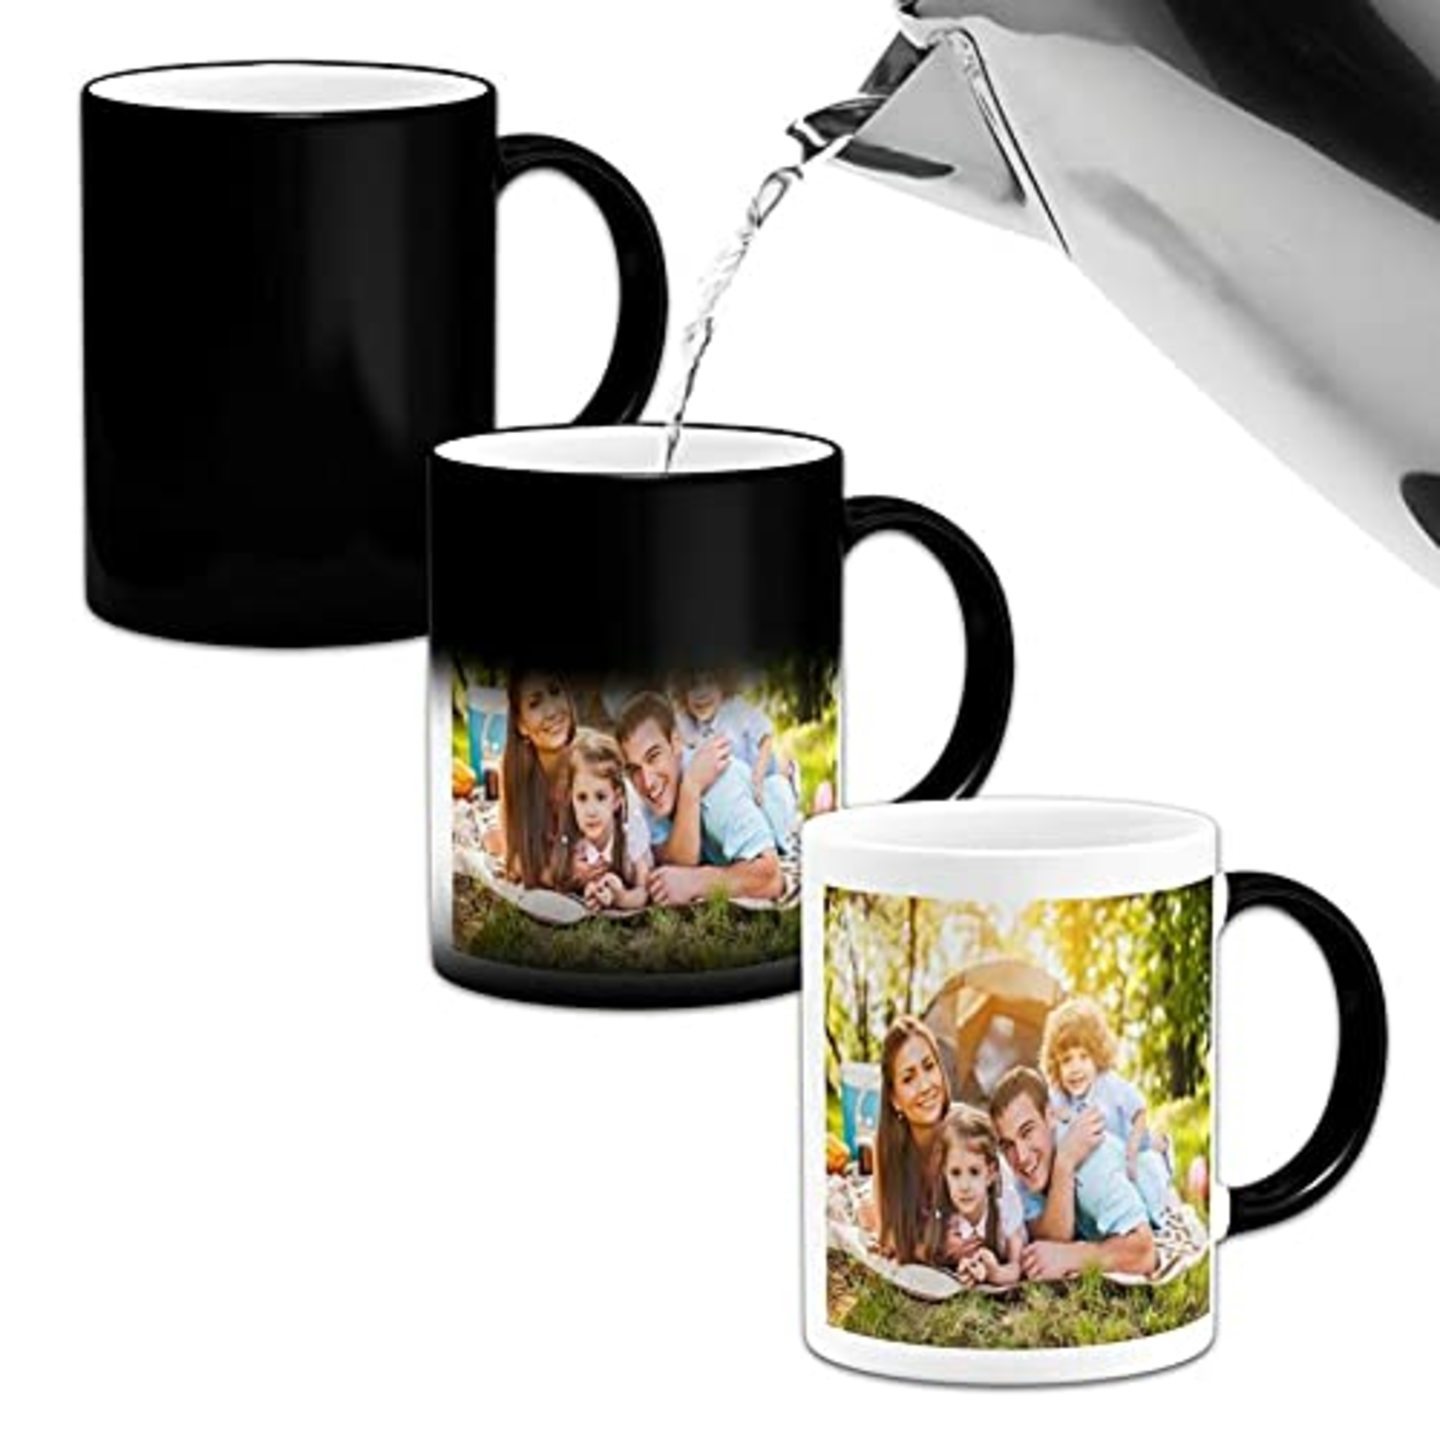 Personalized Magic Mug with your Secret Photo / Message